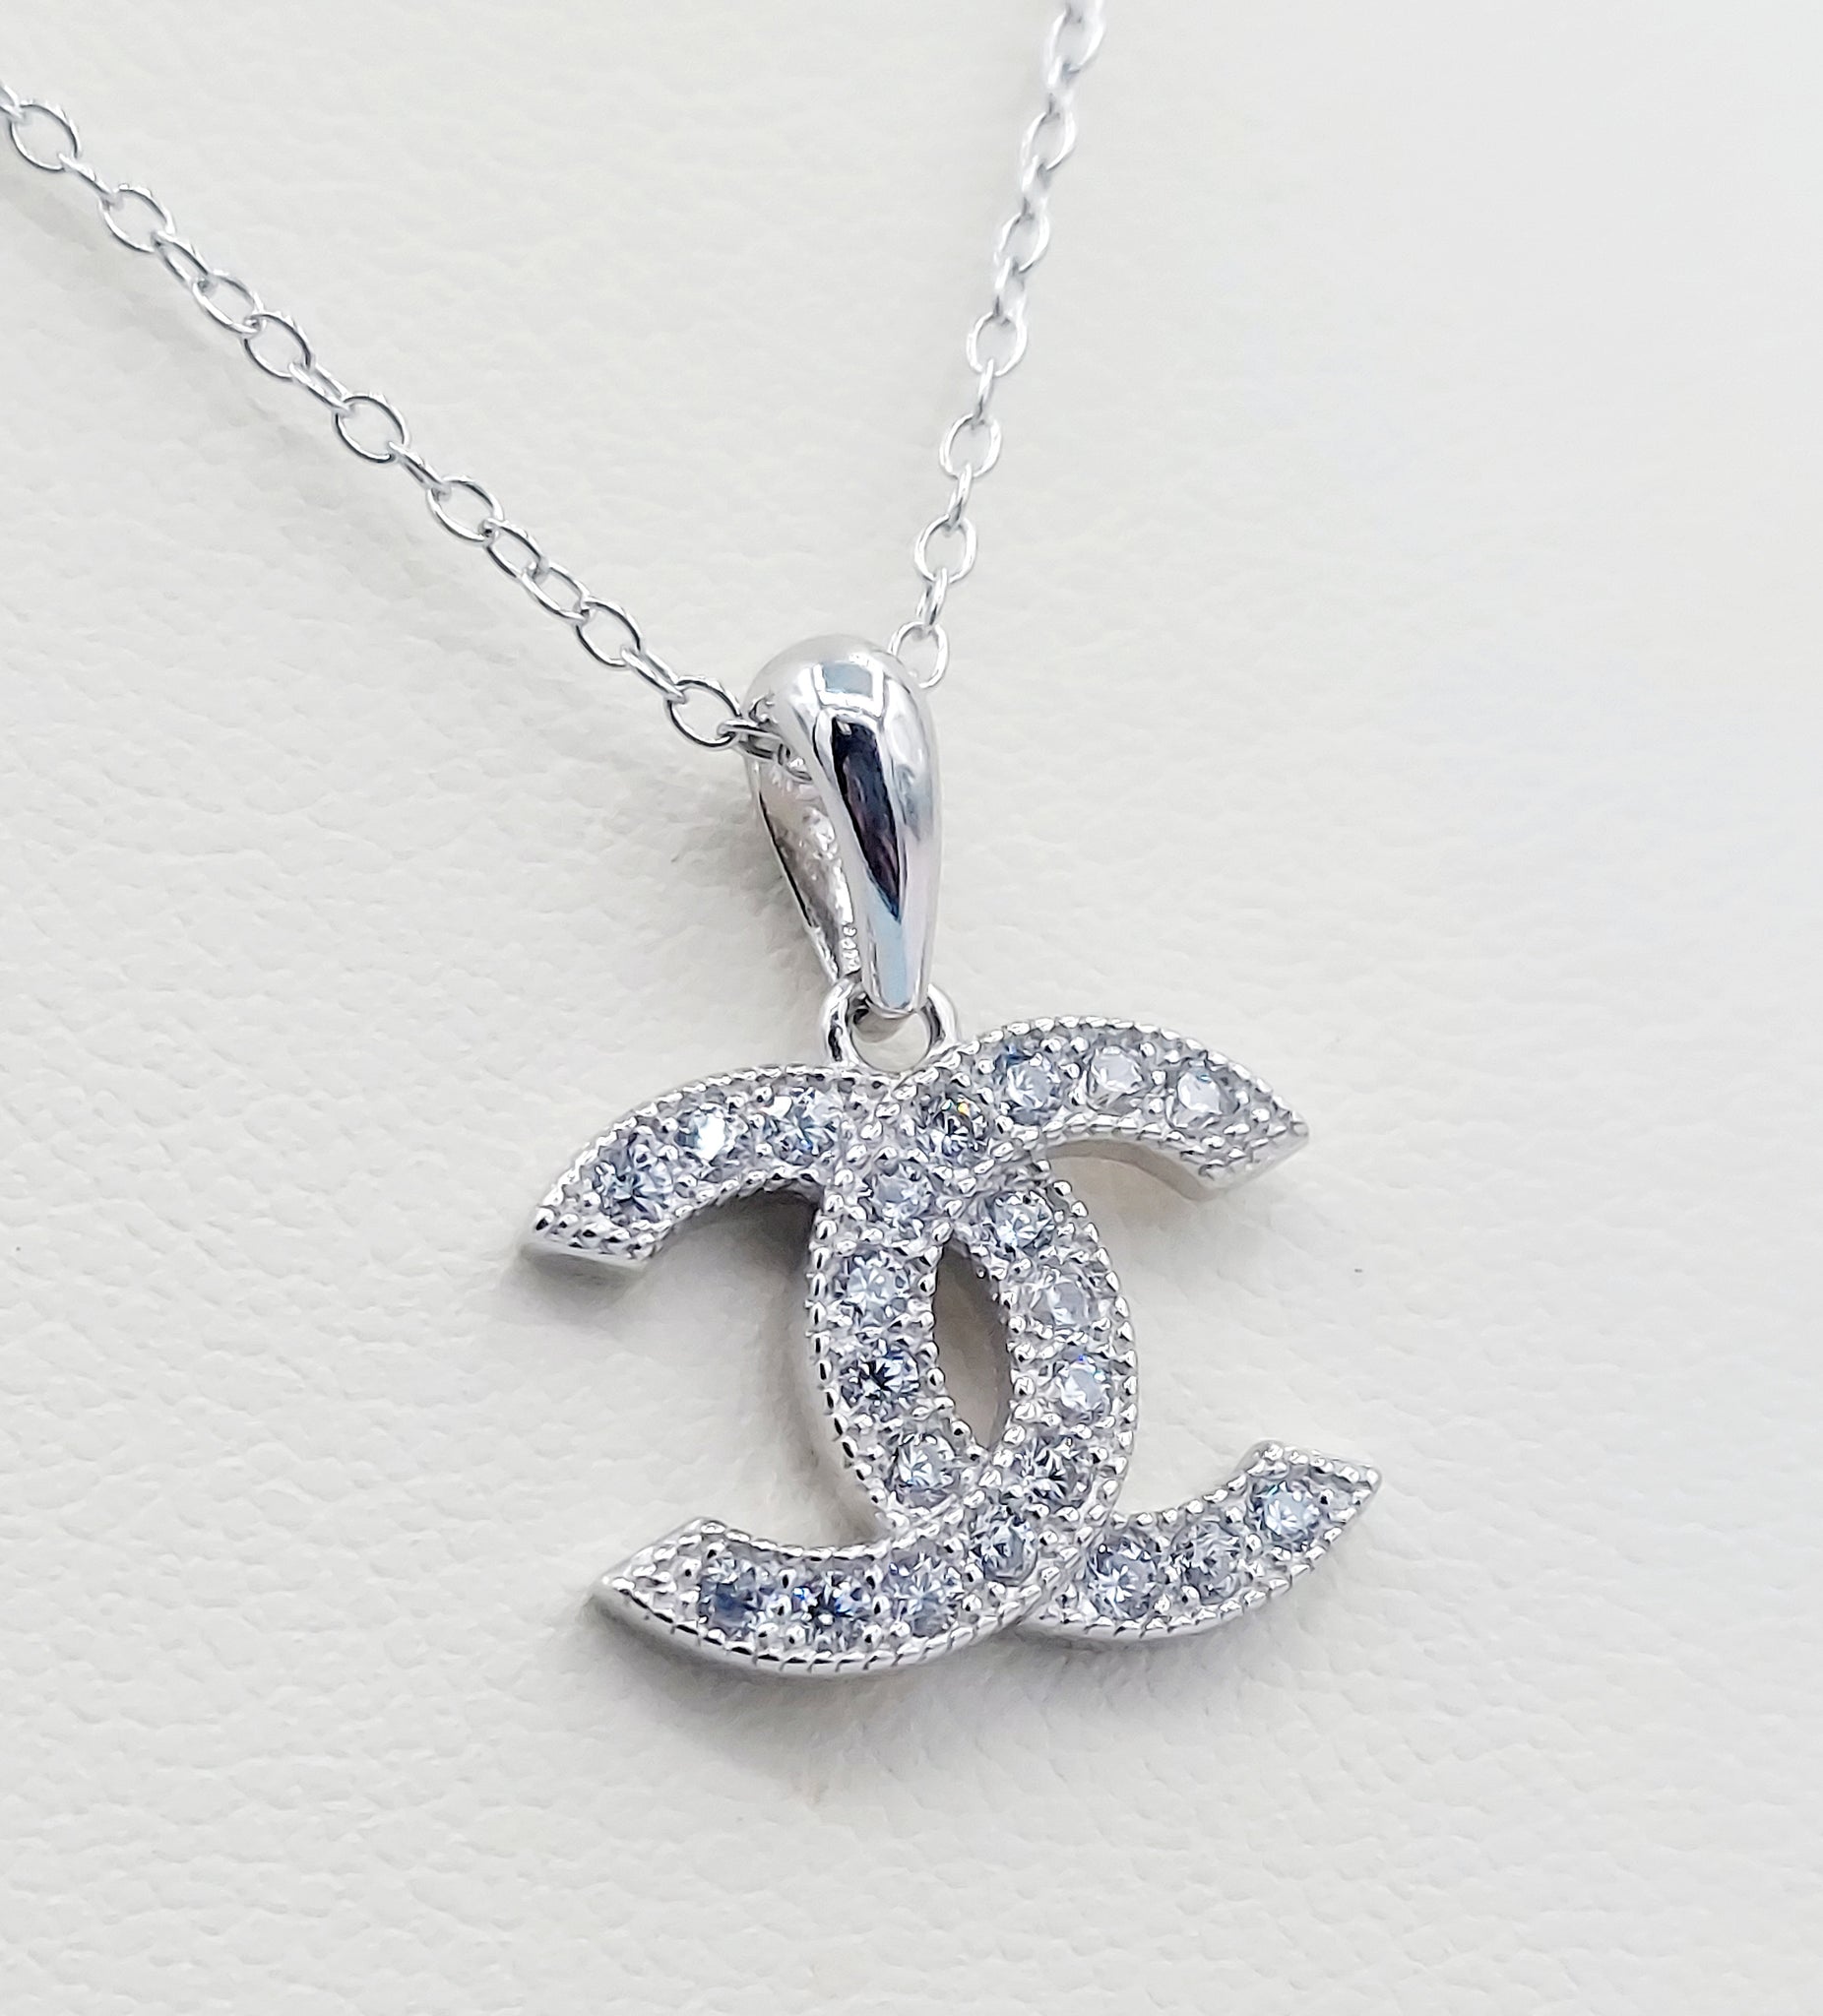 Designer Dupe CC Inspired Necklace - Sterling Silver